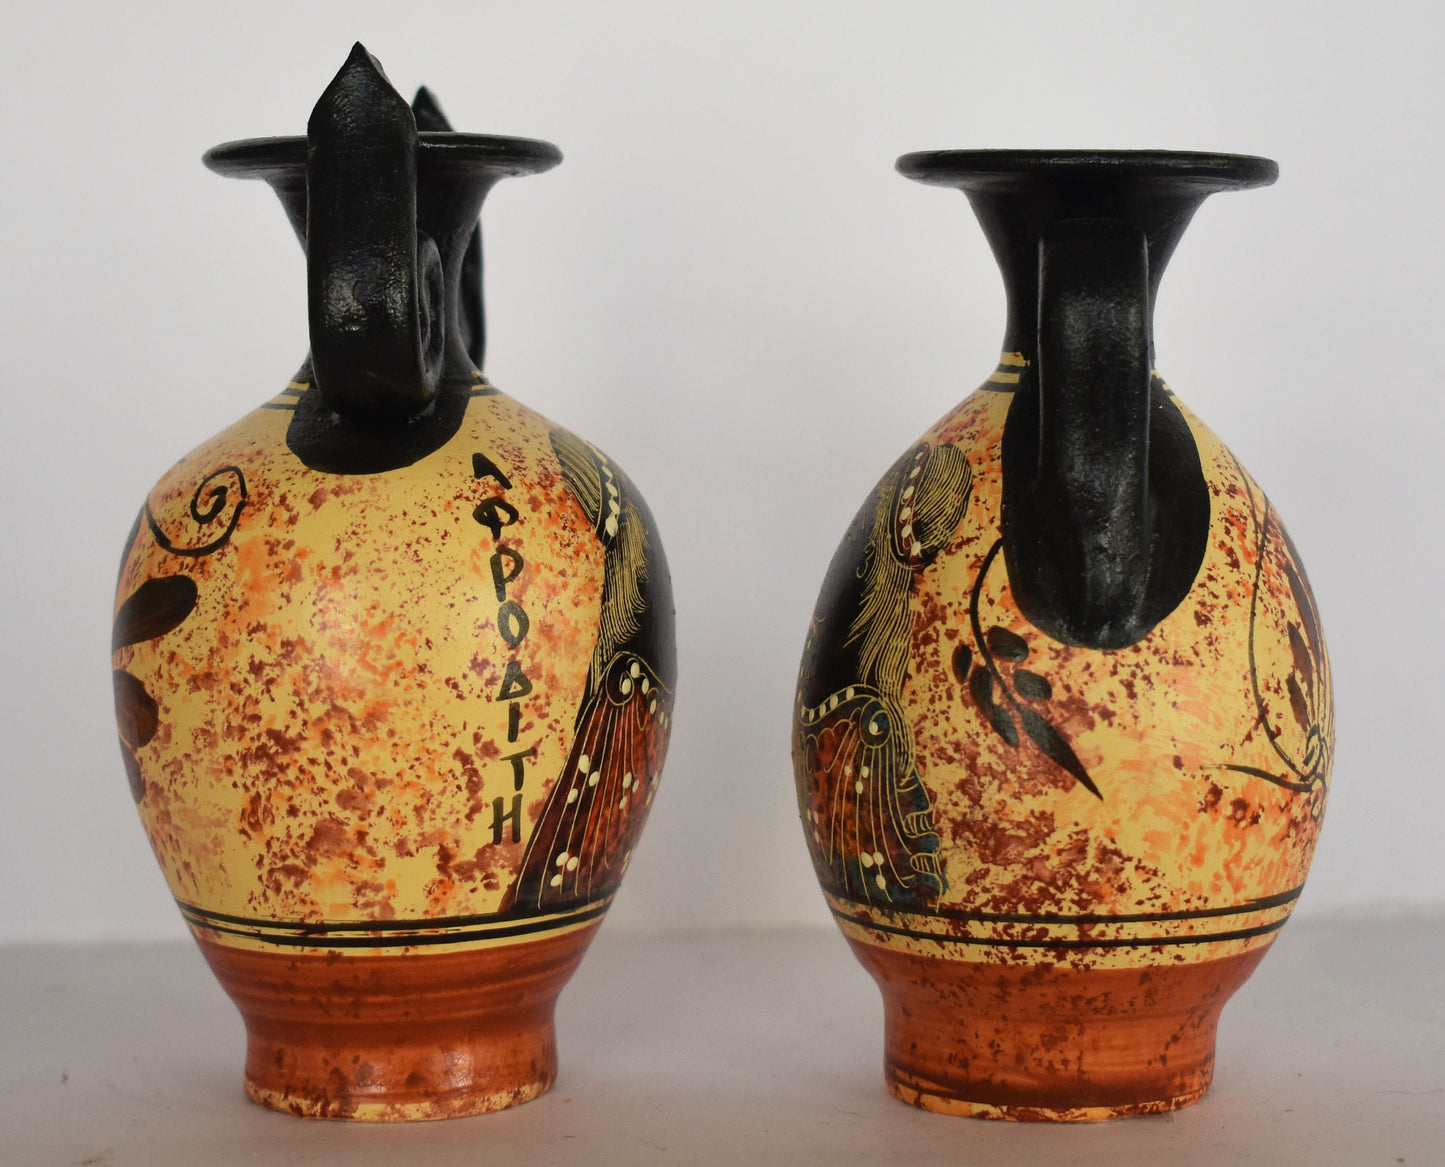 Set of 2 Small Ancient Greek Vases - Aphrodite and Apollo - Floral design - Ceramic Vessels